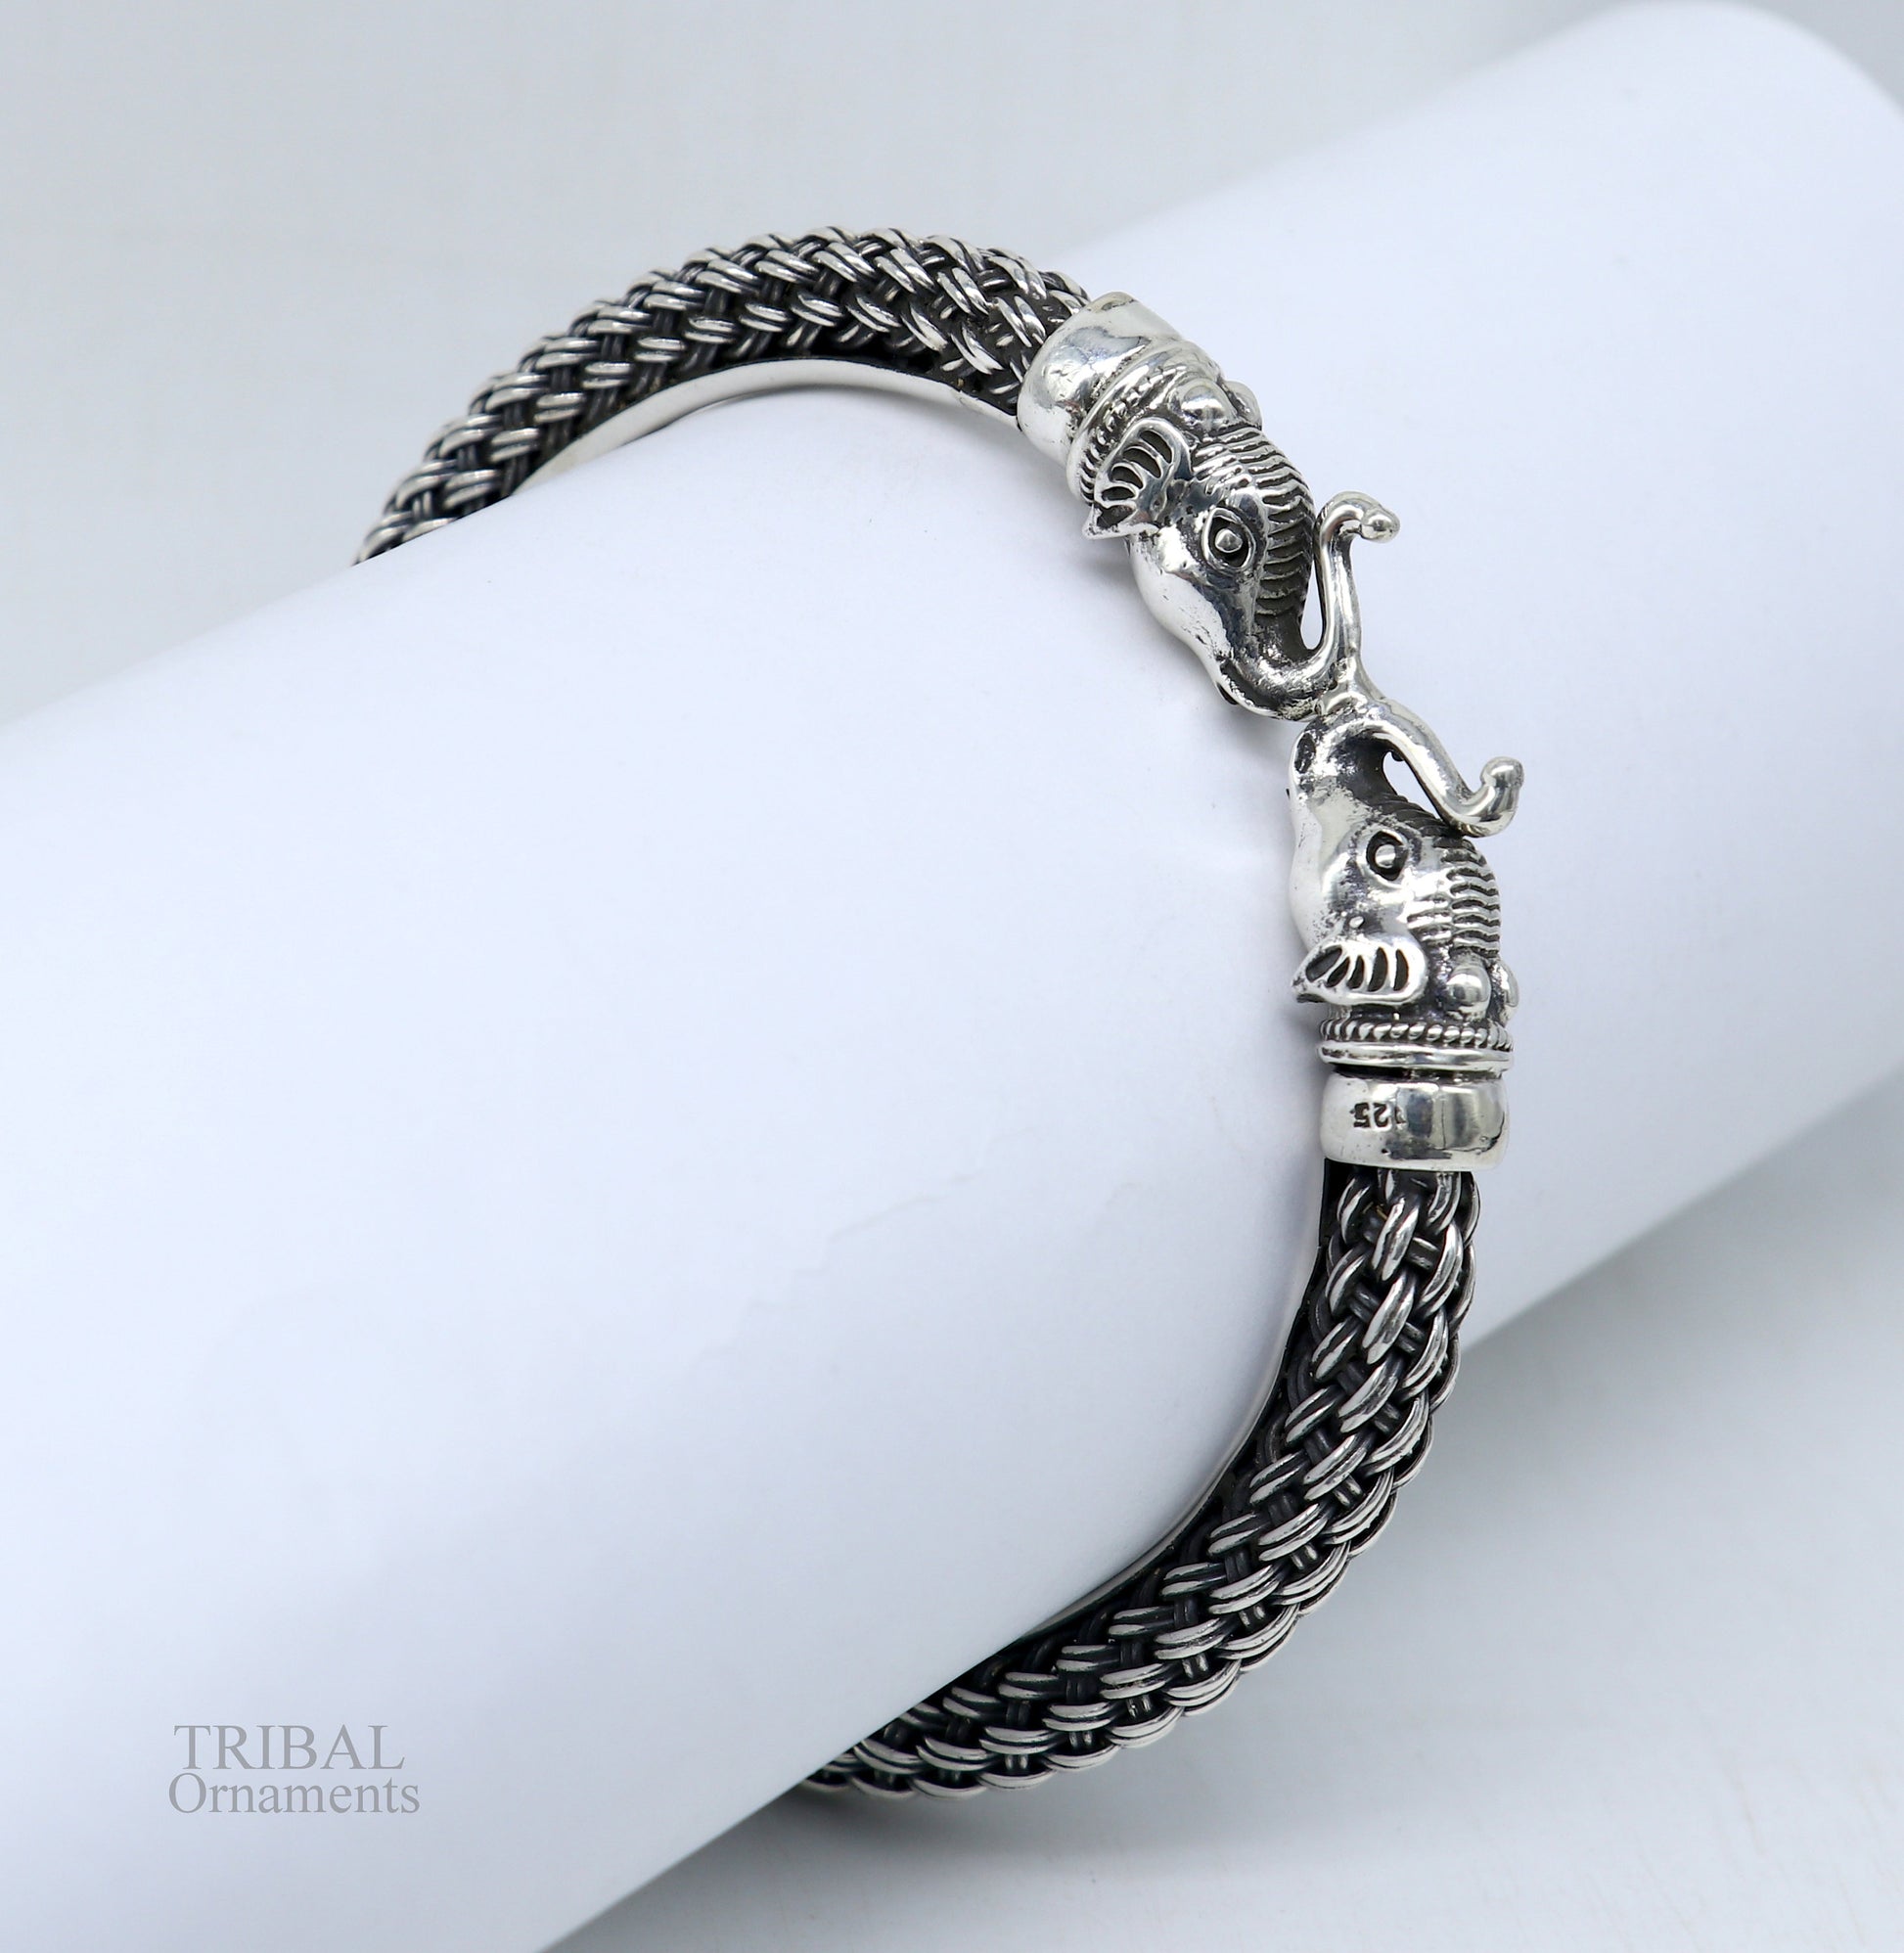 All size 925 sterling silver handmade vintage design stylish elephant face bangle bracelet kada,amazing jewelry from india nsk434 - TRIBAL ORNAMENTS